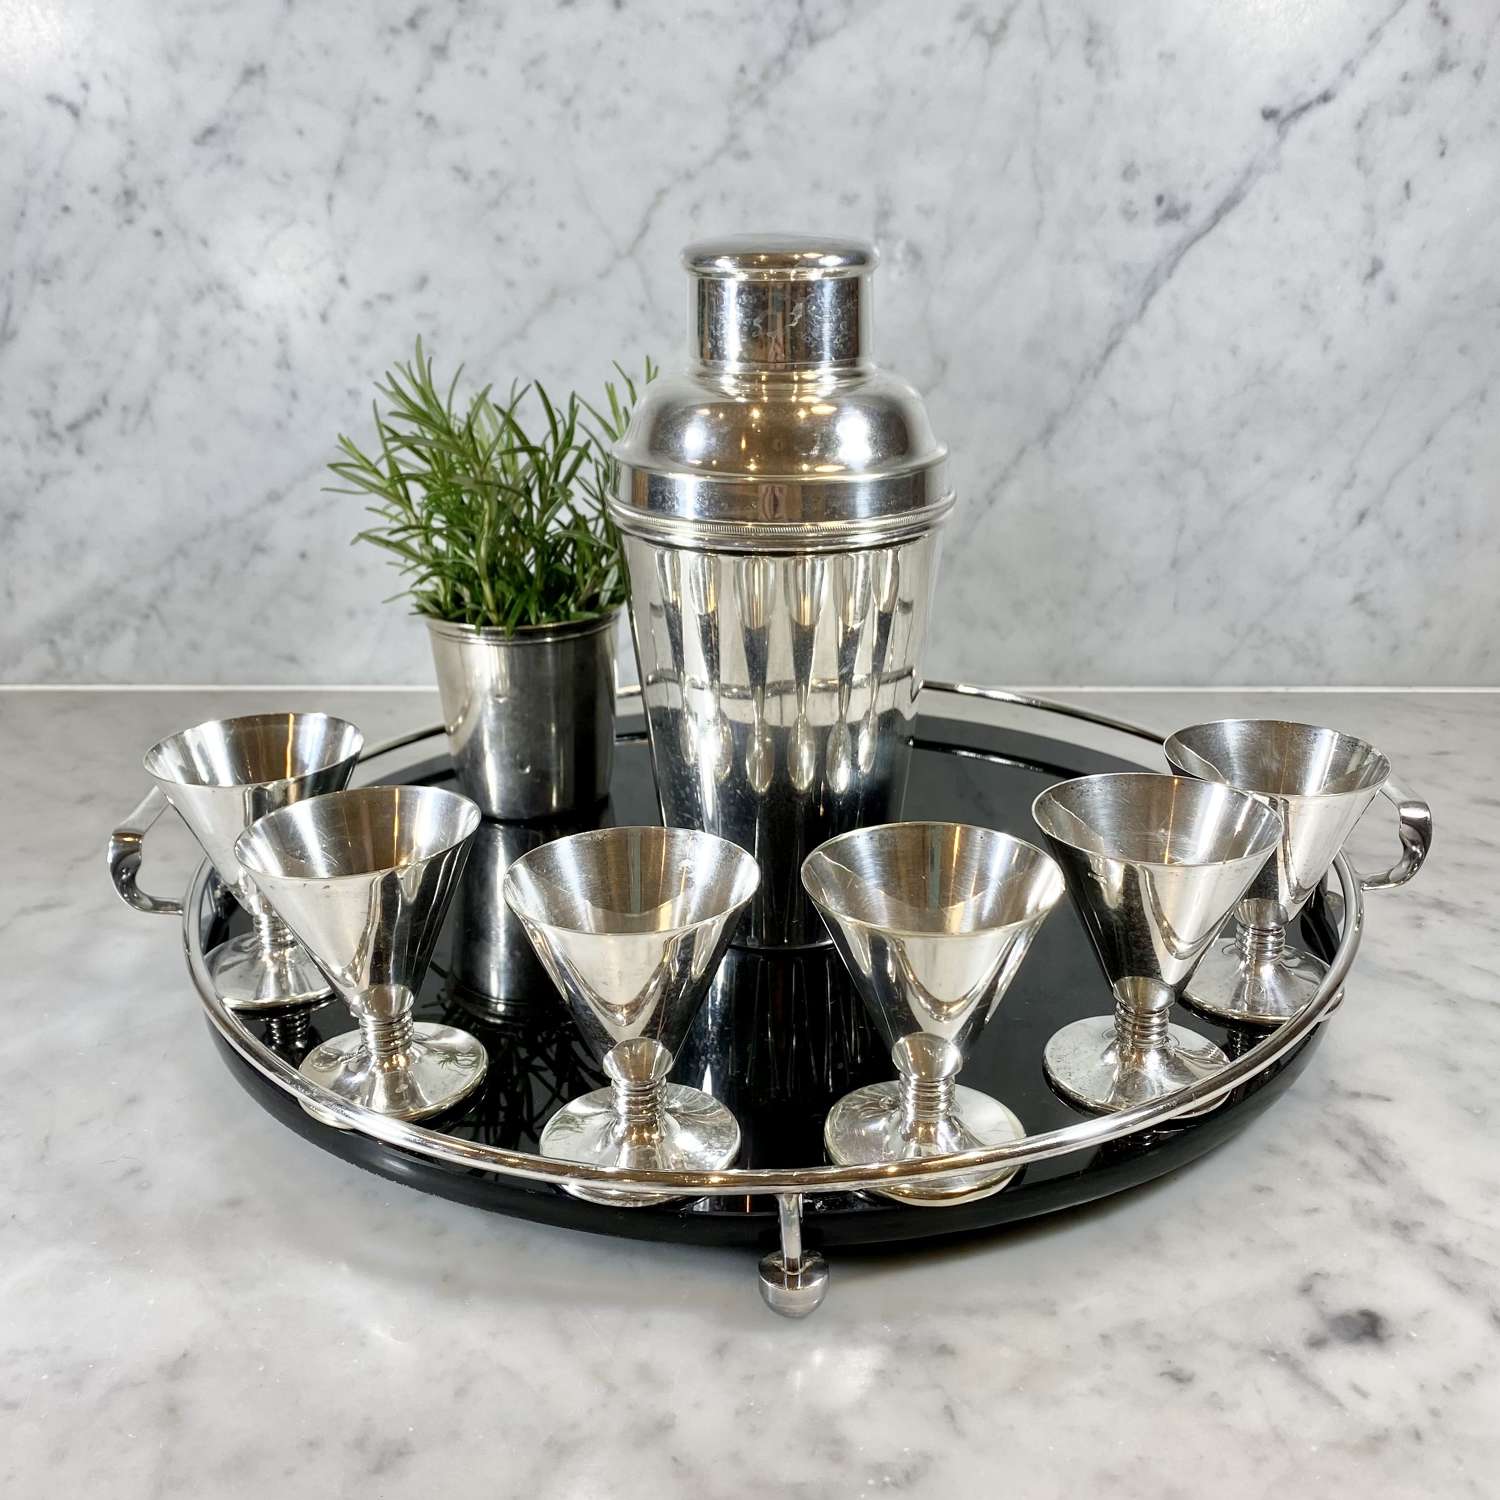 Art Deco bar set comprising shaker, tray & cups